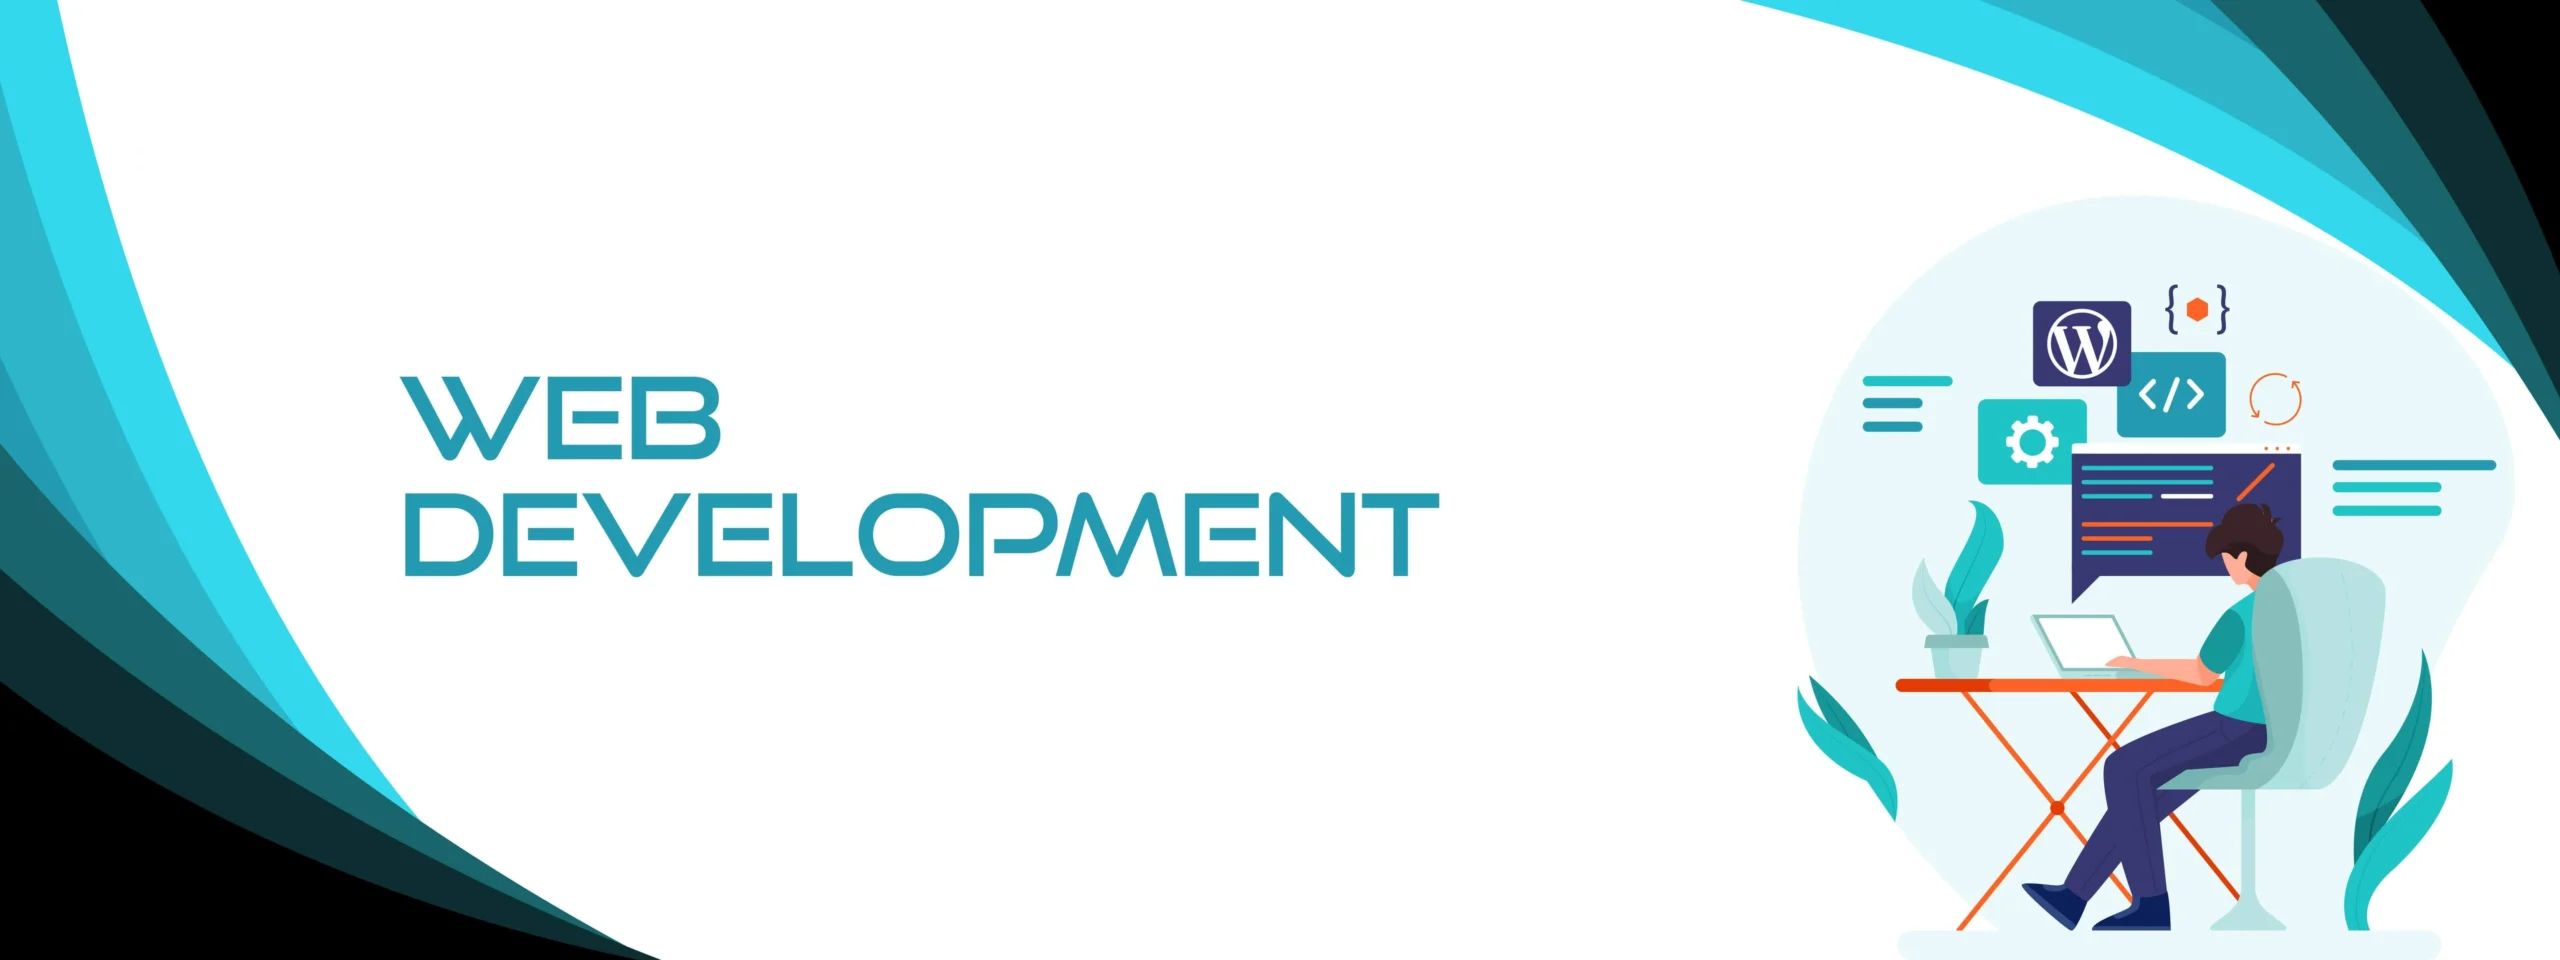 web-development-page-banner-us-tech-zone